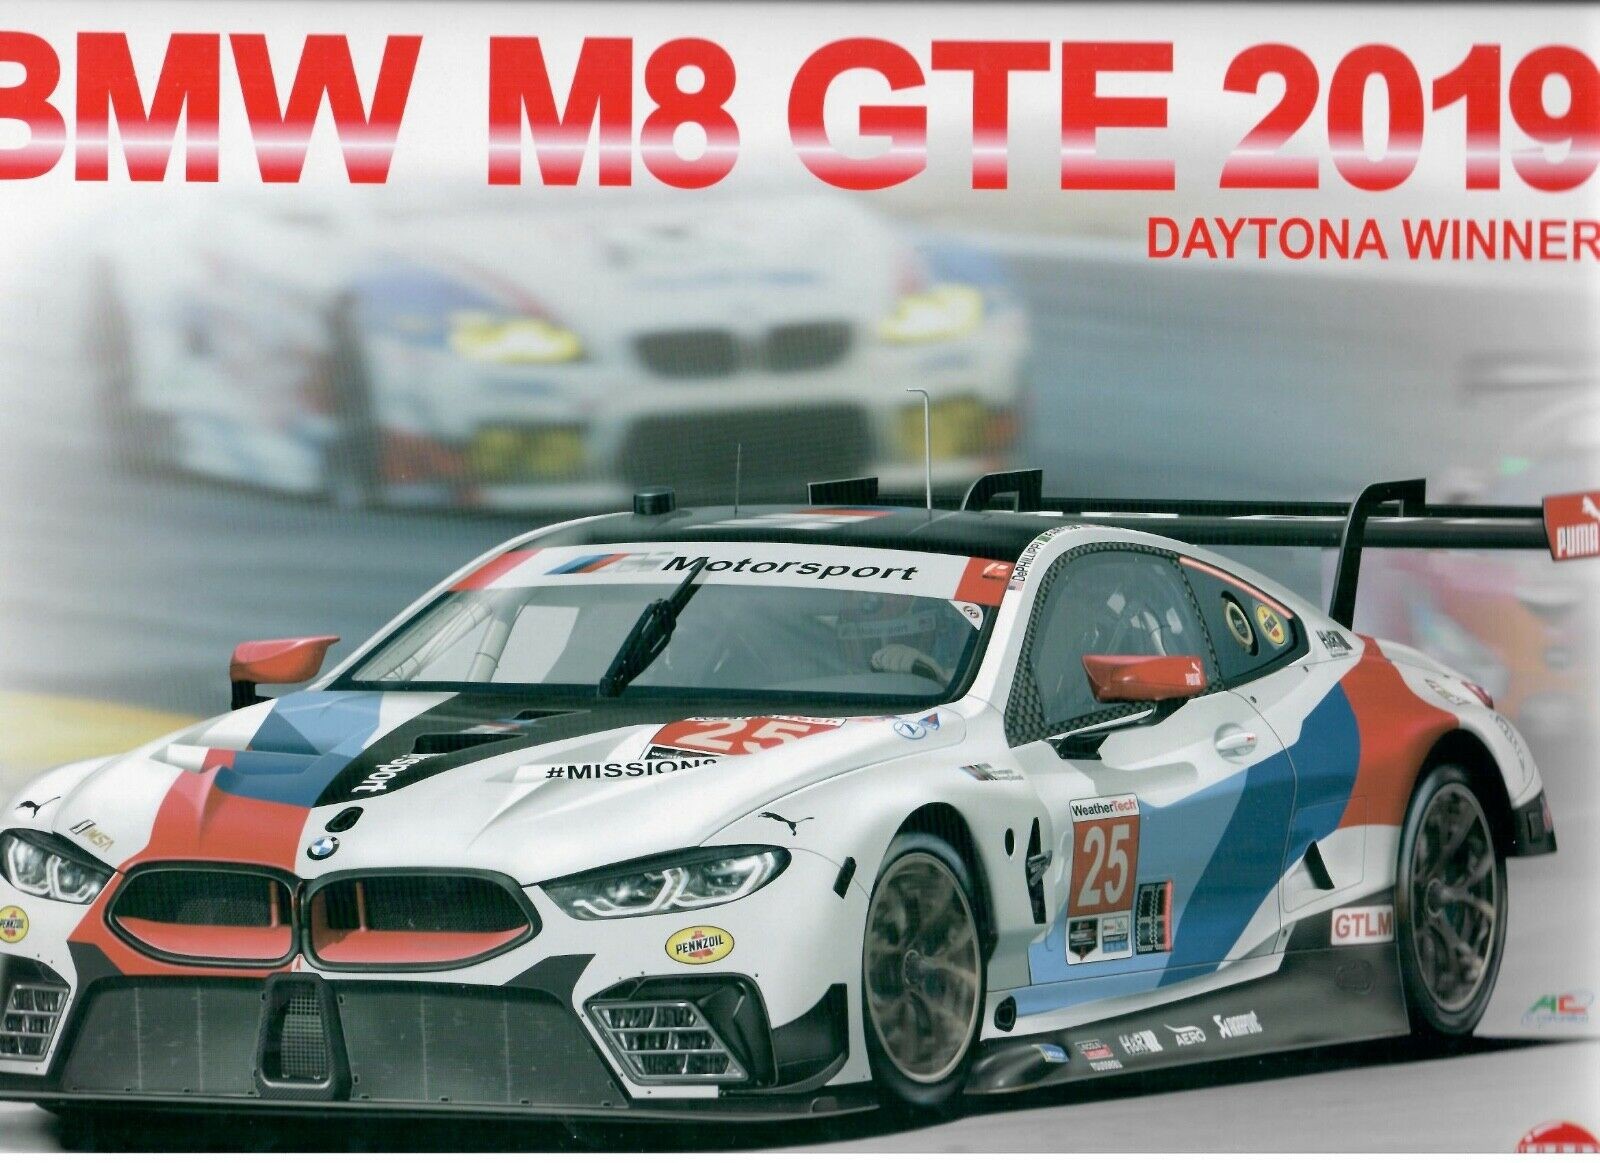 Platz NuNu Platz NuNu BMW M8 GTE 2019 Daytona Winner Race Car - 1